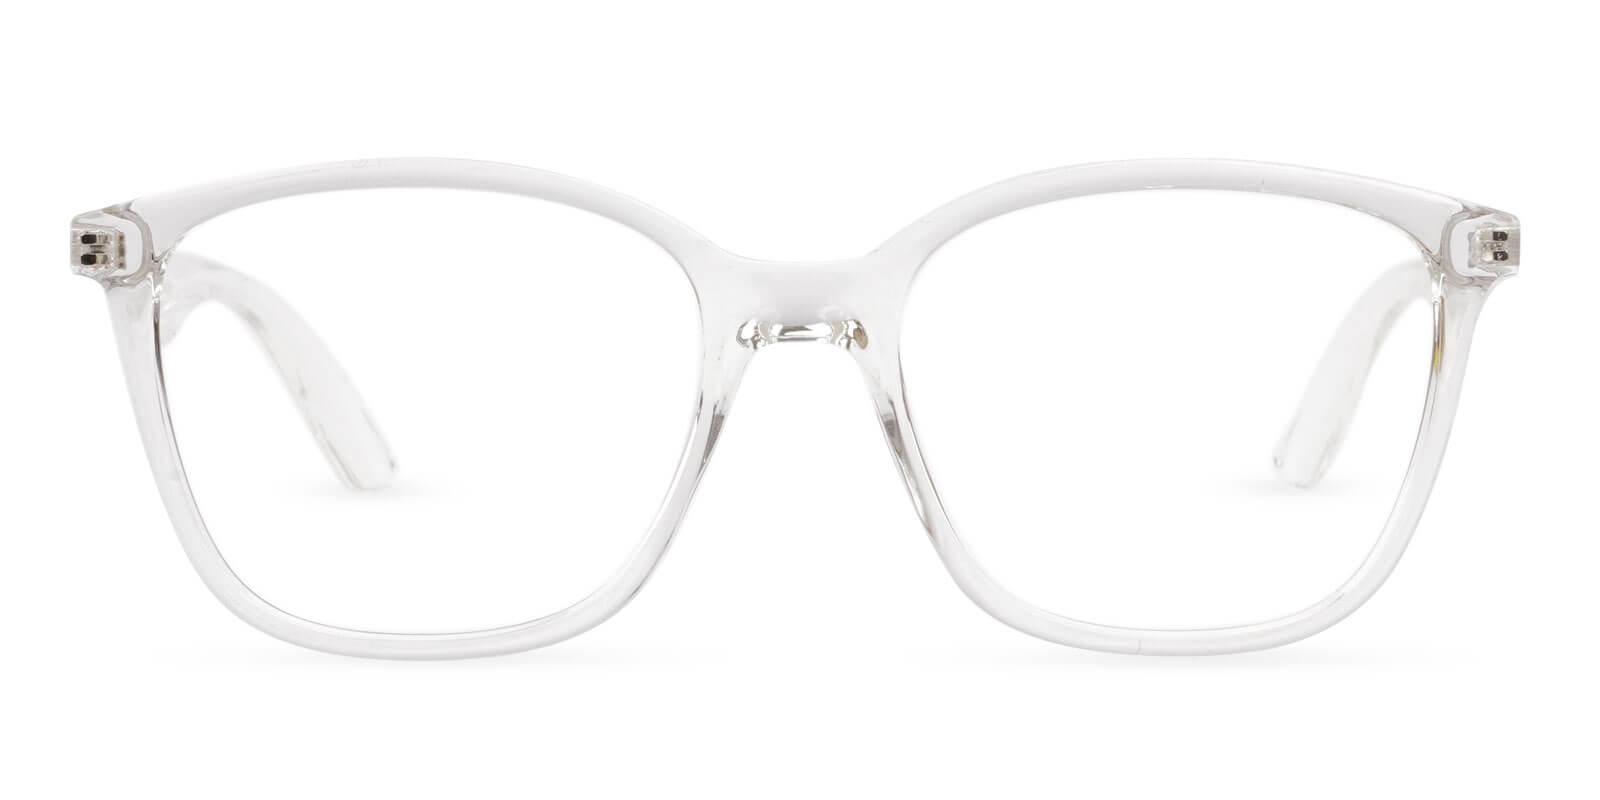 Northern Translucent TR Eyeglasses , UniversalBridgeFit Frames from ABBE Glasses